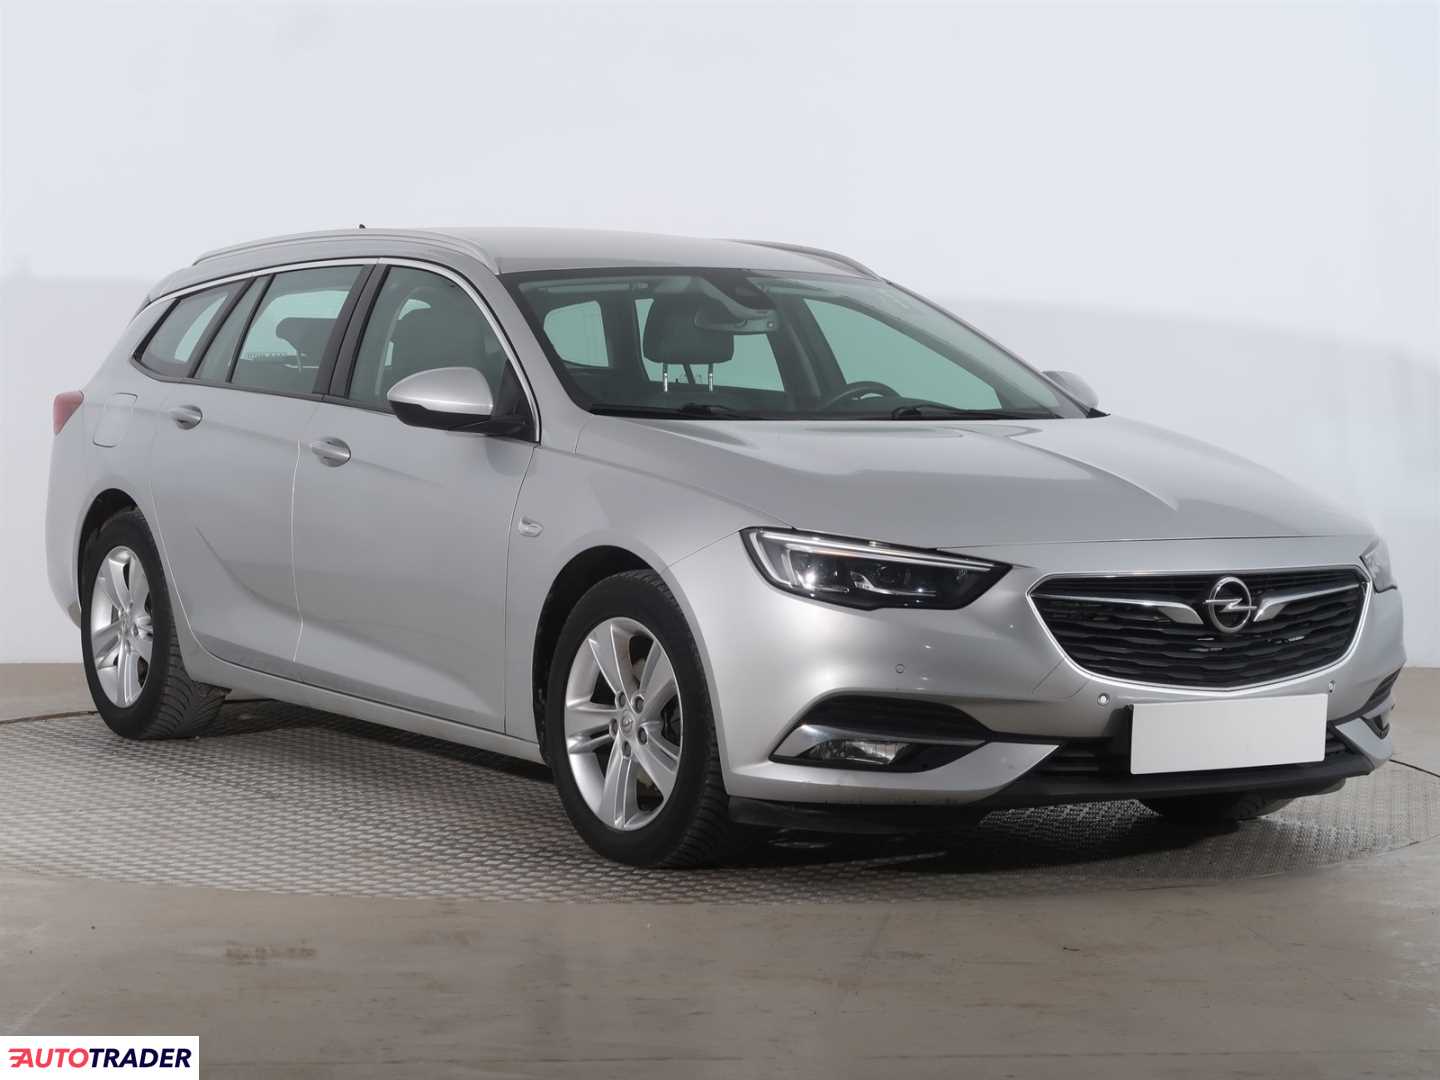 Opel Insignia 2019 1.5 162 KM